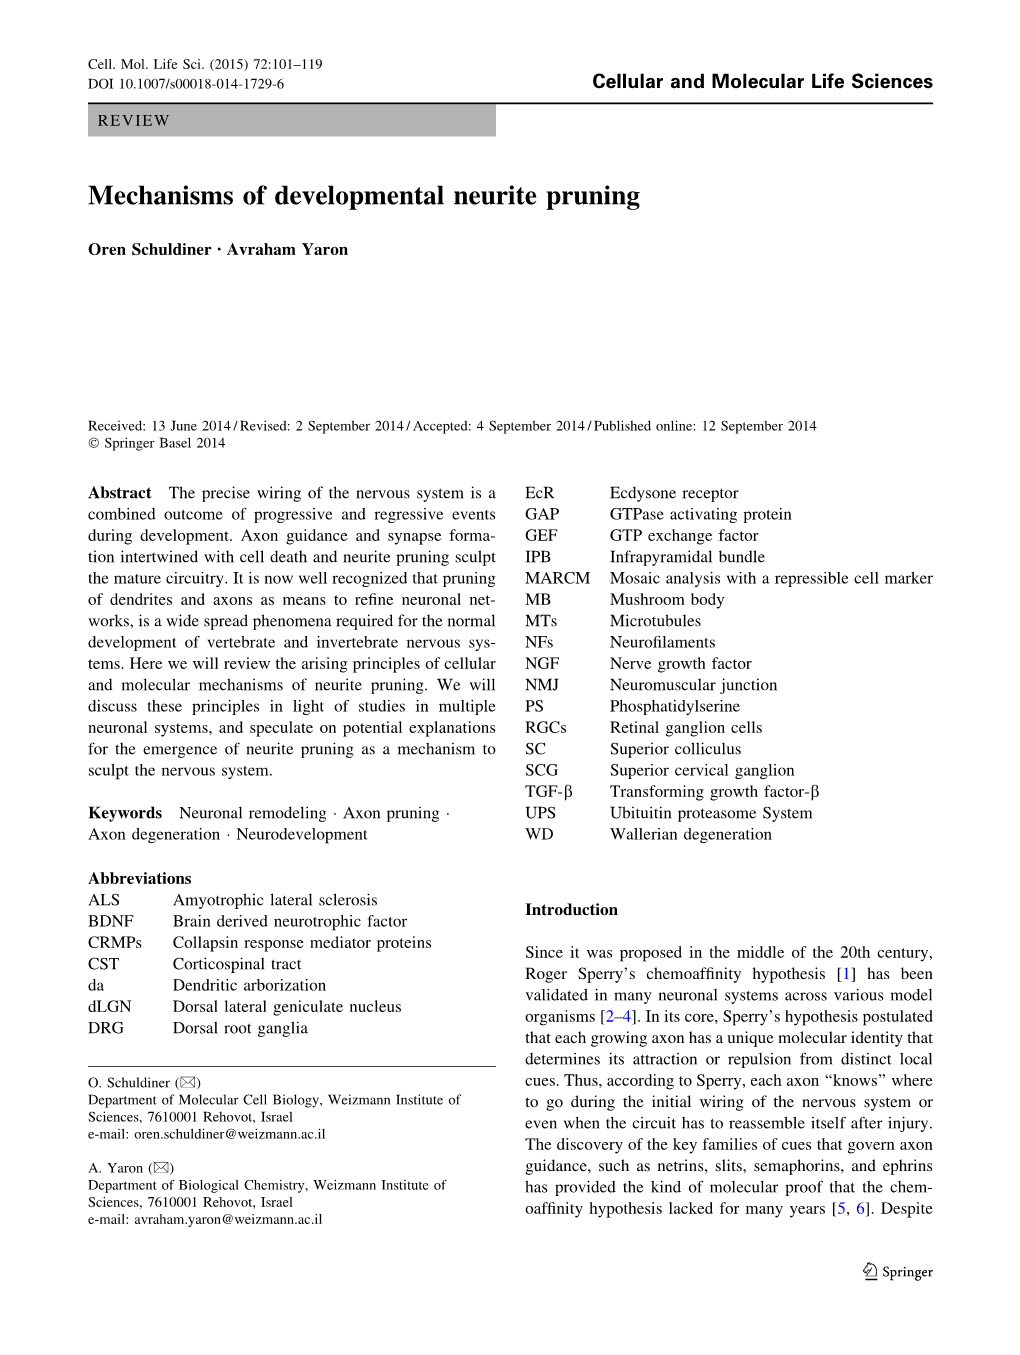 Mechanisms of Developmental Neurite Pruning